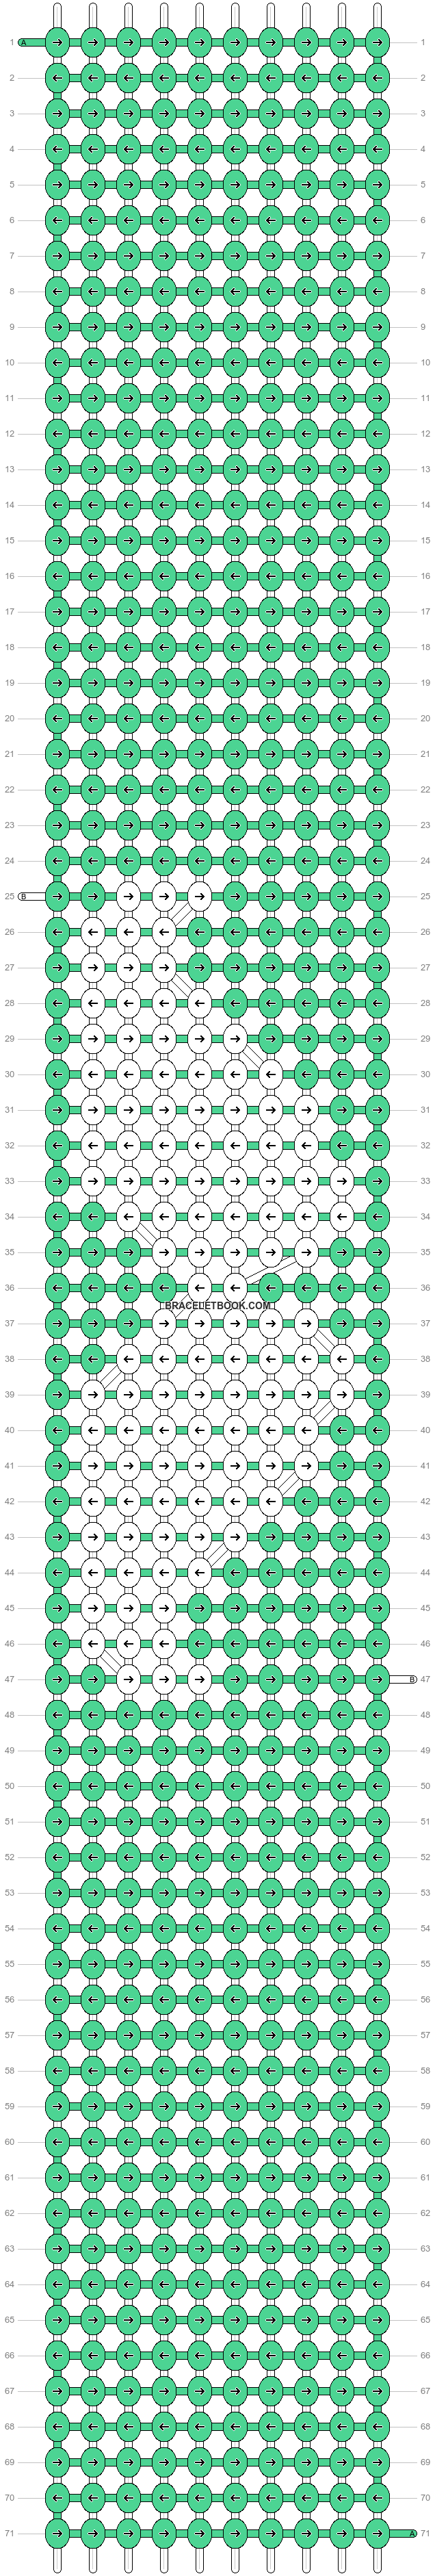 Alpha pattern #58988 variation #104813 pattern